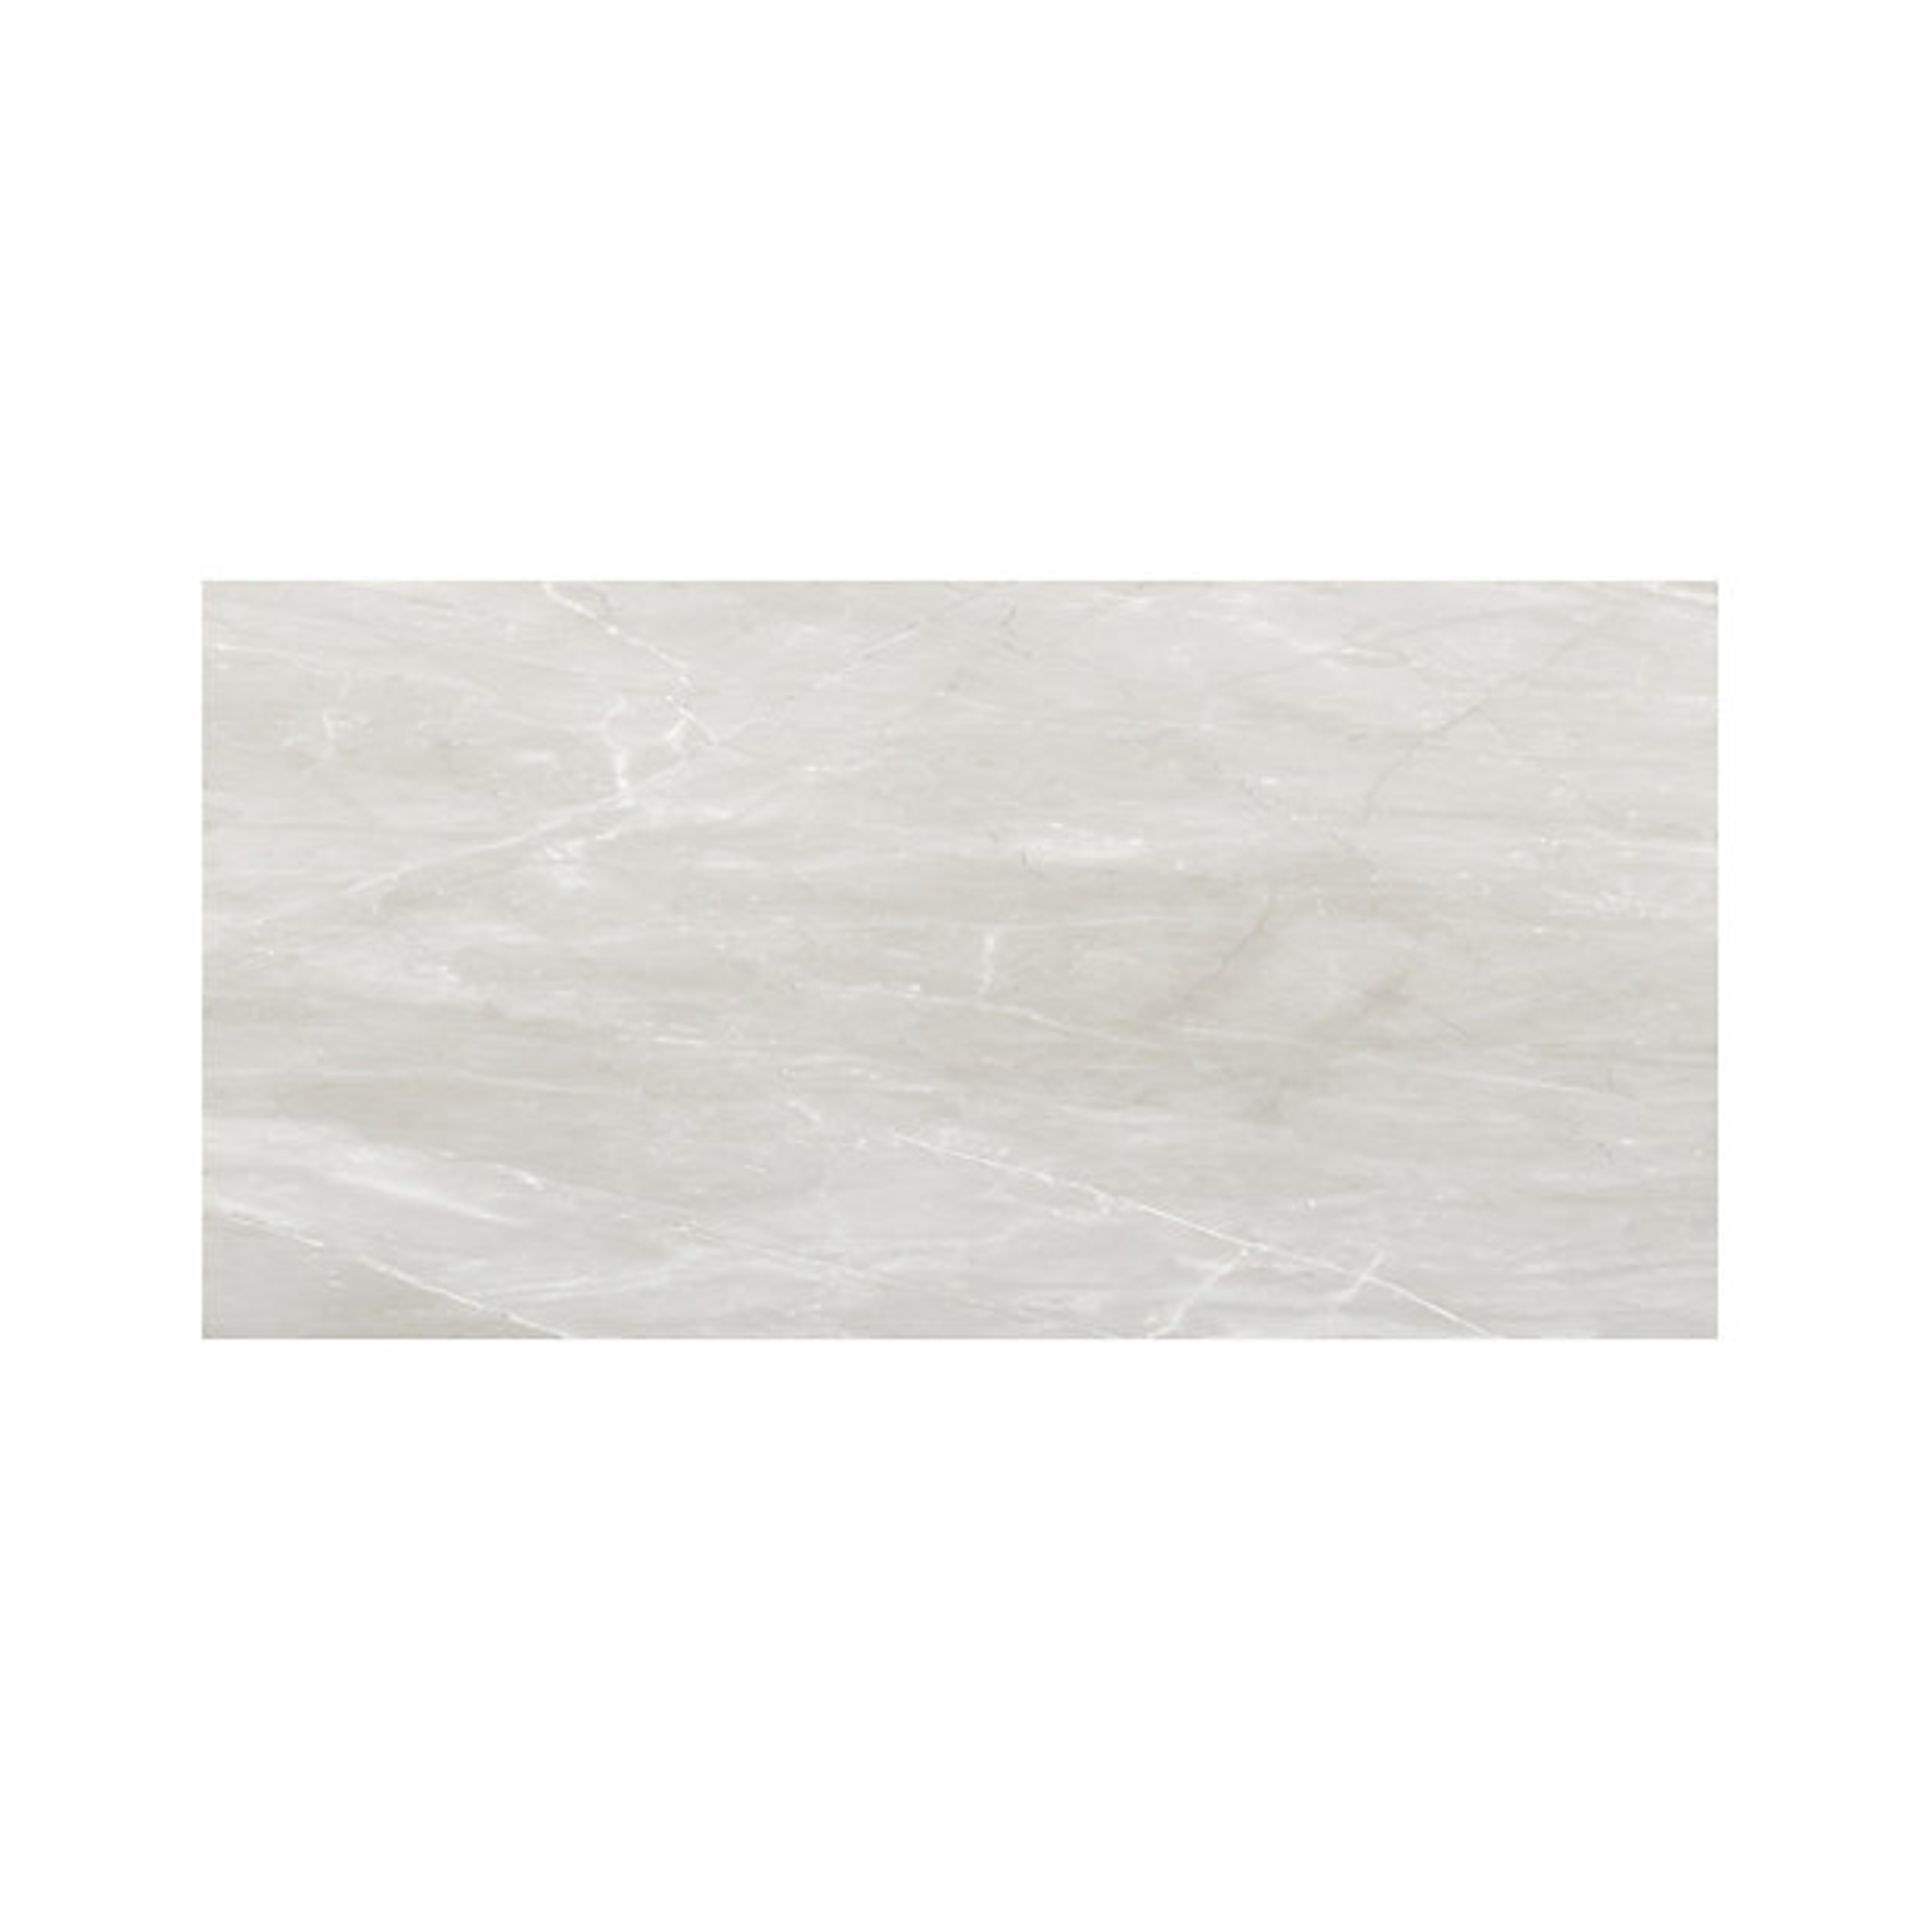 New 30.24m2 Killington Light Grey Matt Marble Effect Ceramic Floor Tile. Room Use: Any Room, Ex... - Image 2 of 2